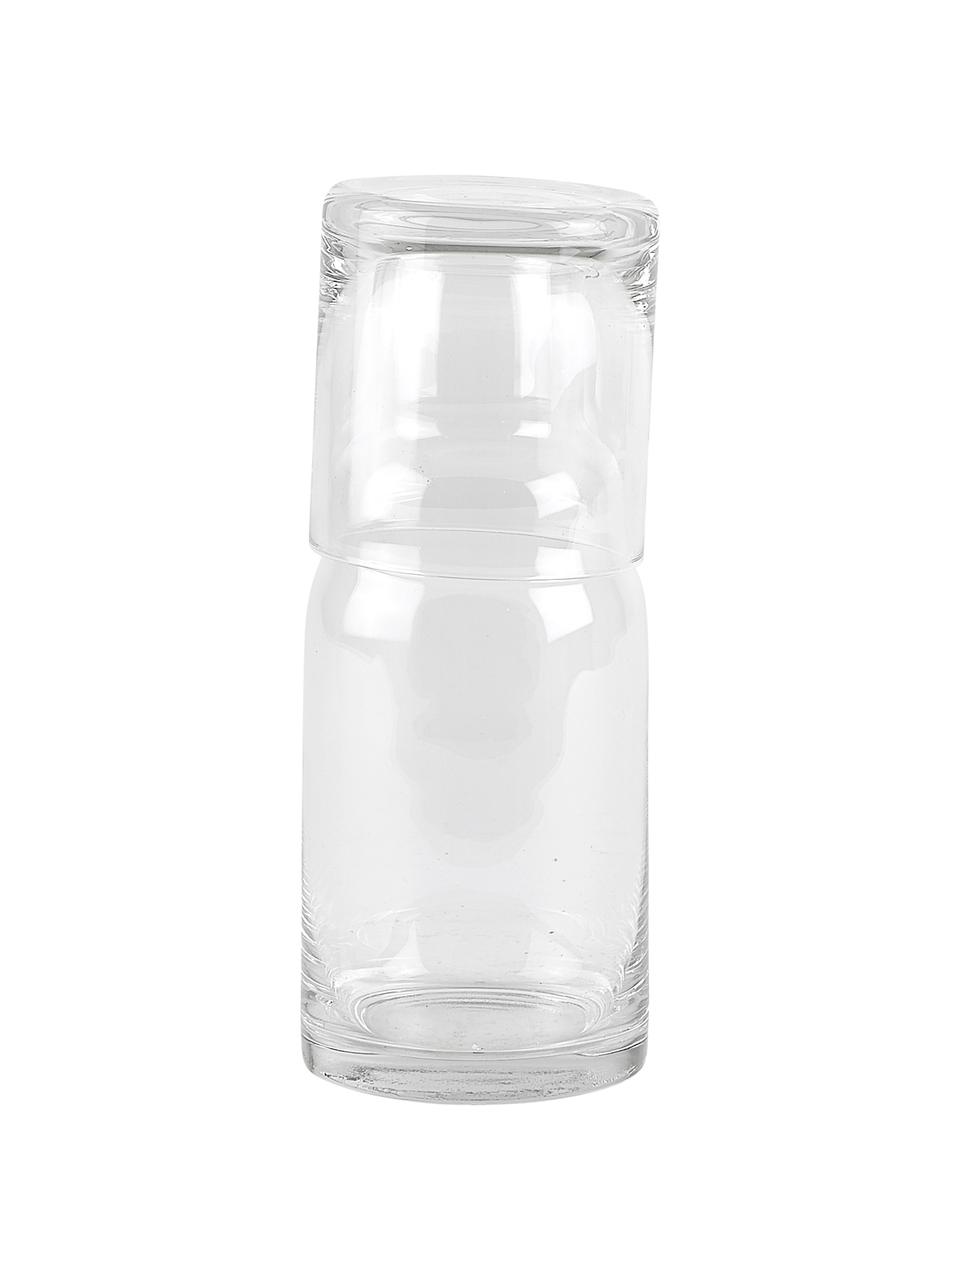 Carafe avec verre Wadi, 800 ml, 2 élém., Verre, Transparent, haut. 21 cm, 800 ml